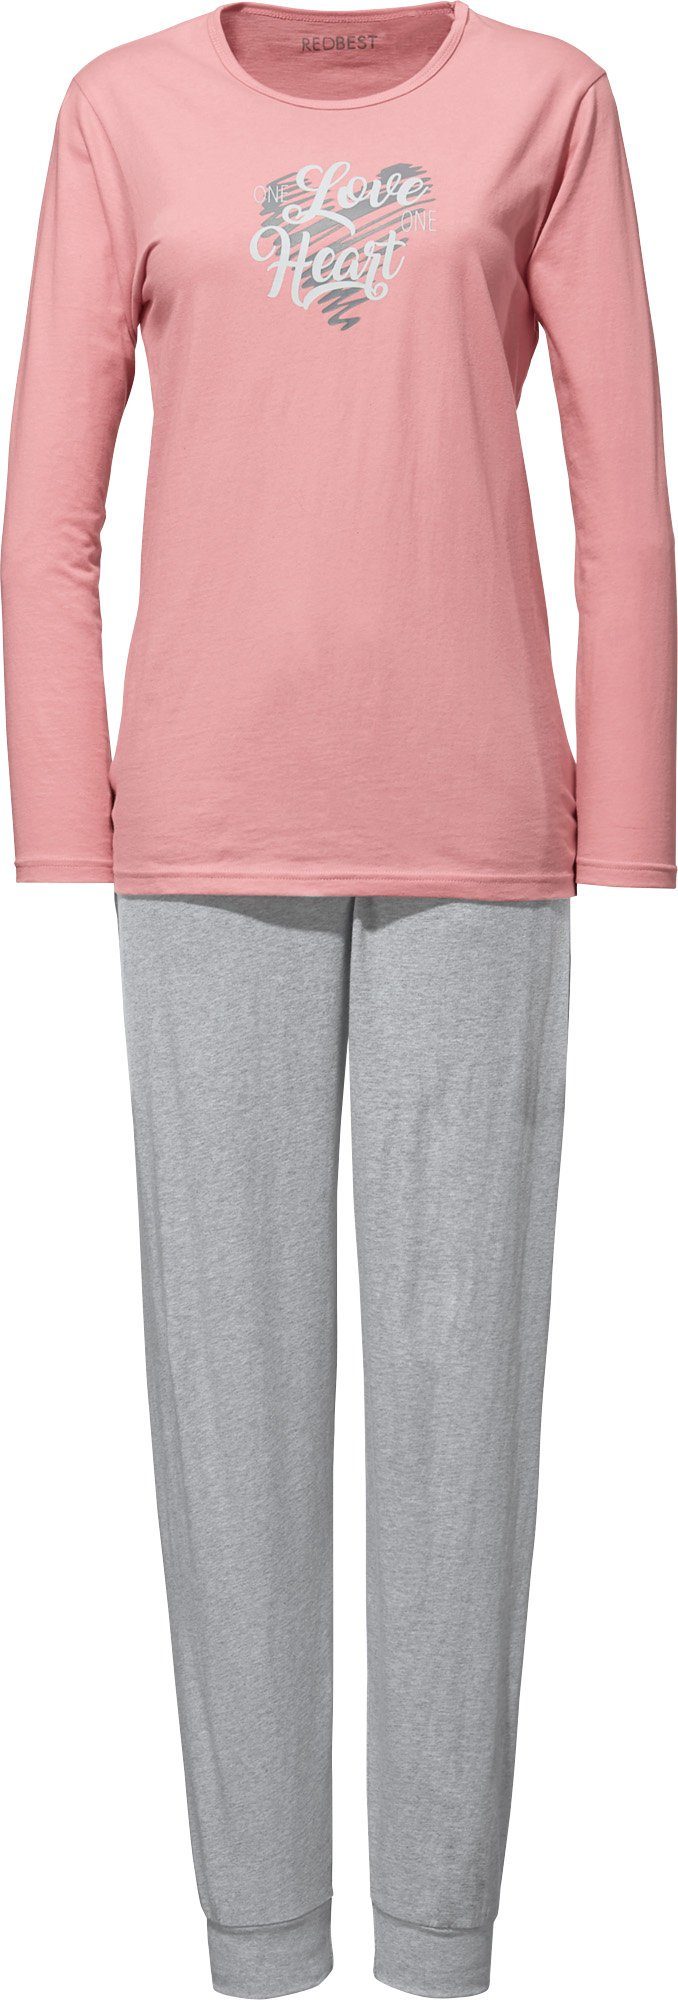 Damen-Schlafanzug Pyjama Uni Single-Jersey REDBEST